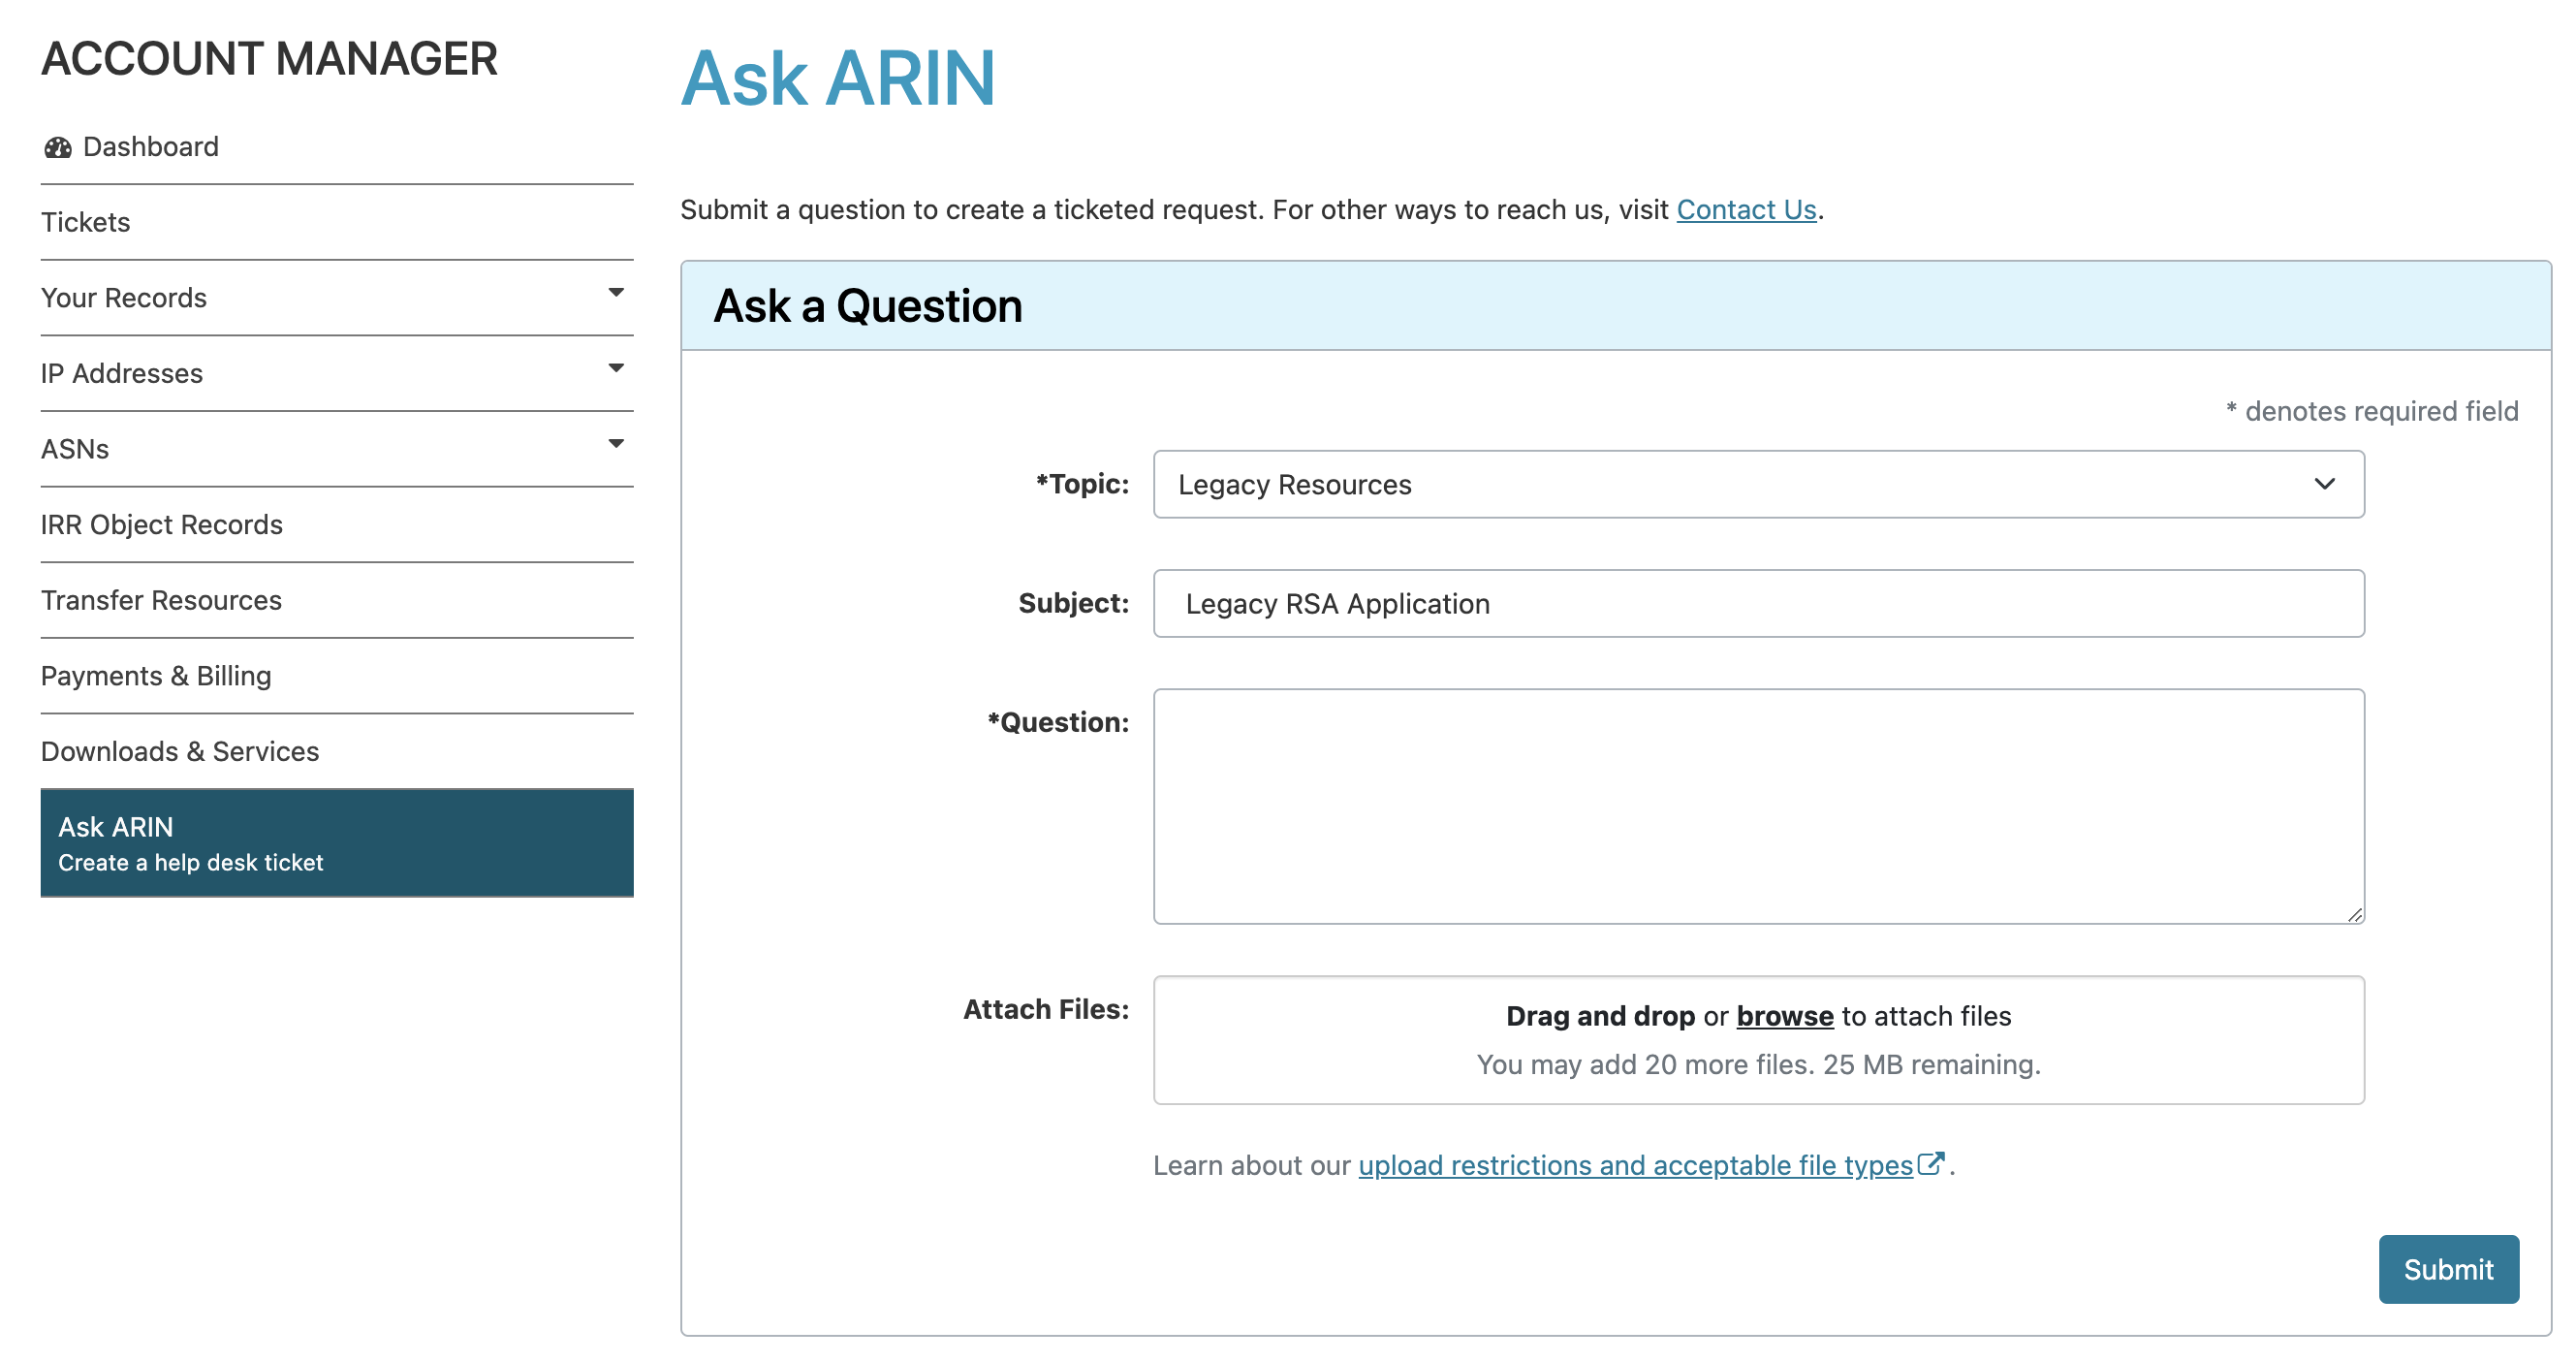 Requesting an LRSA from ARIN